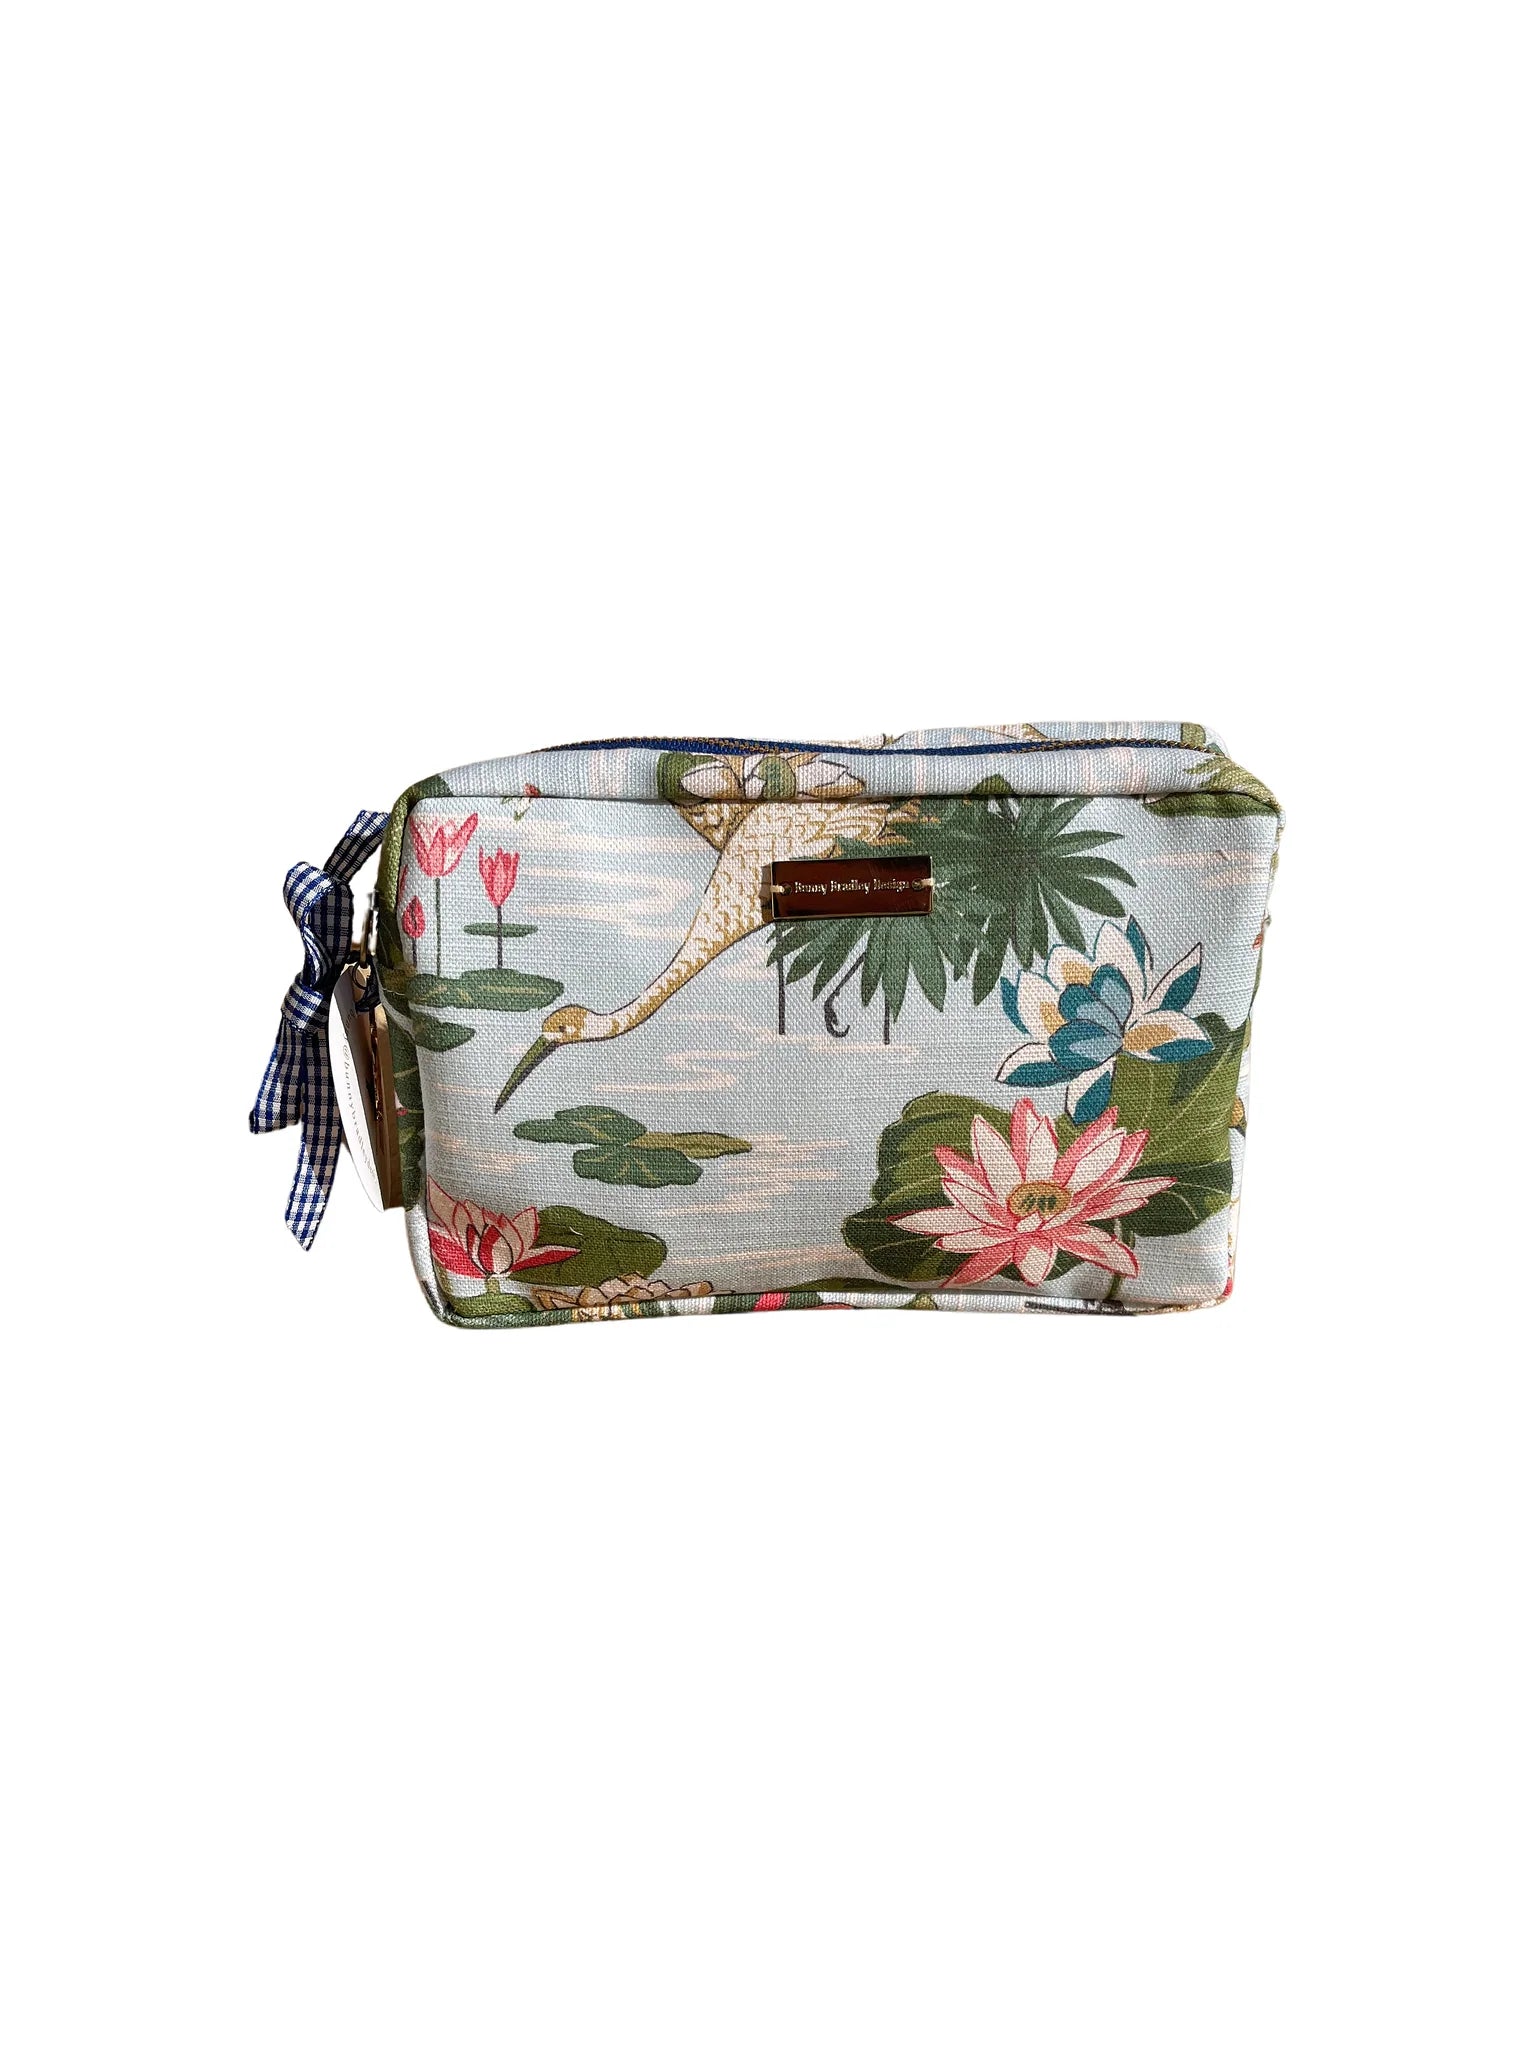 Marigold Large Cosmetic Bag | Bunny Bradley Design